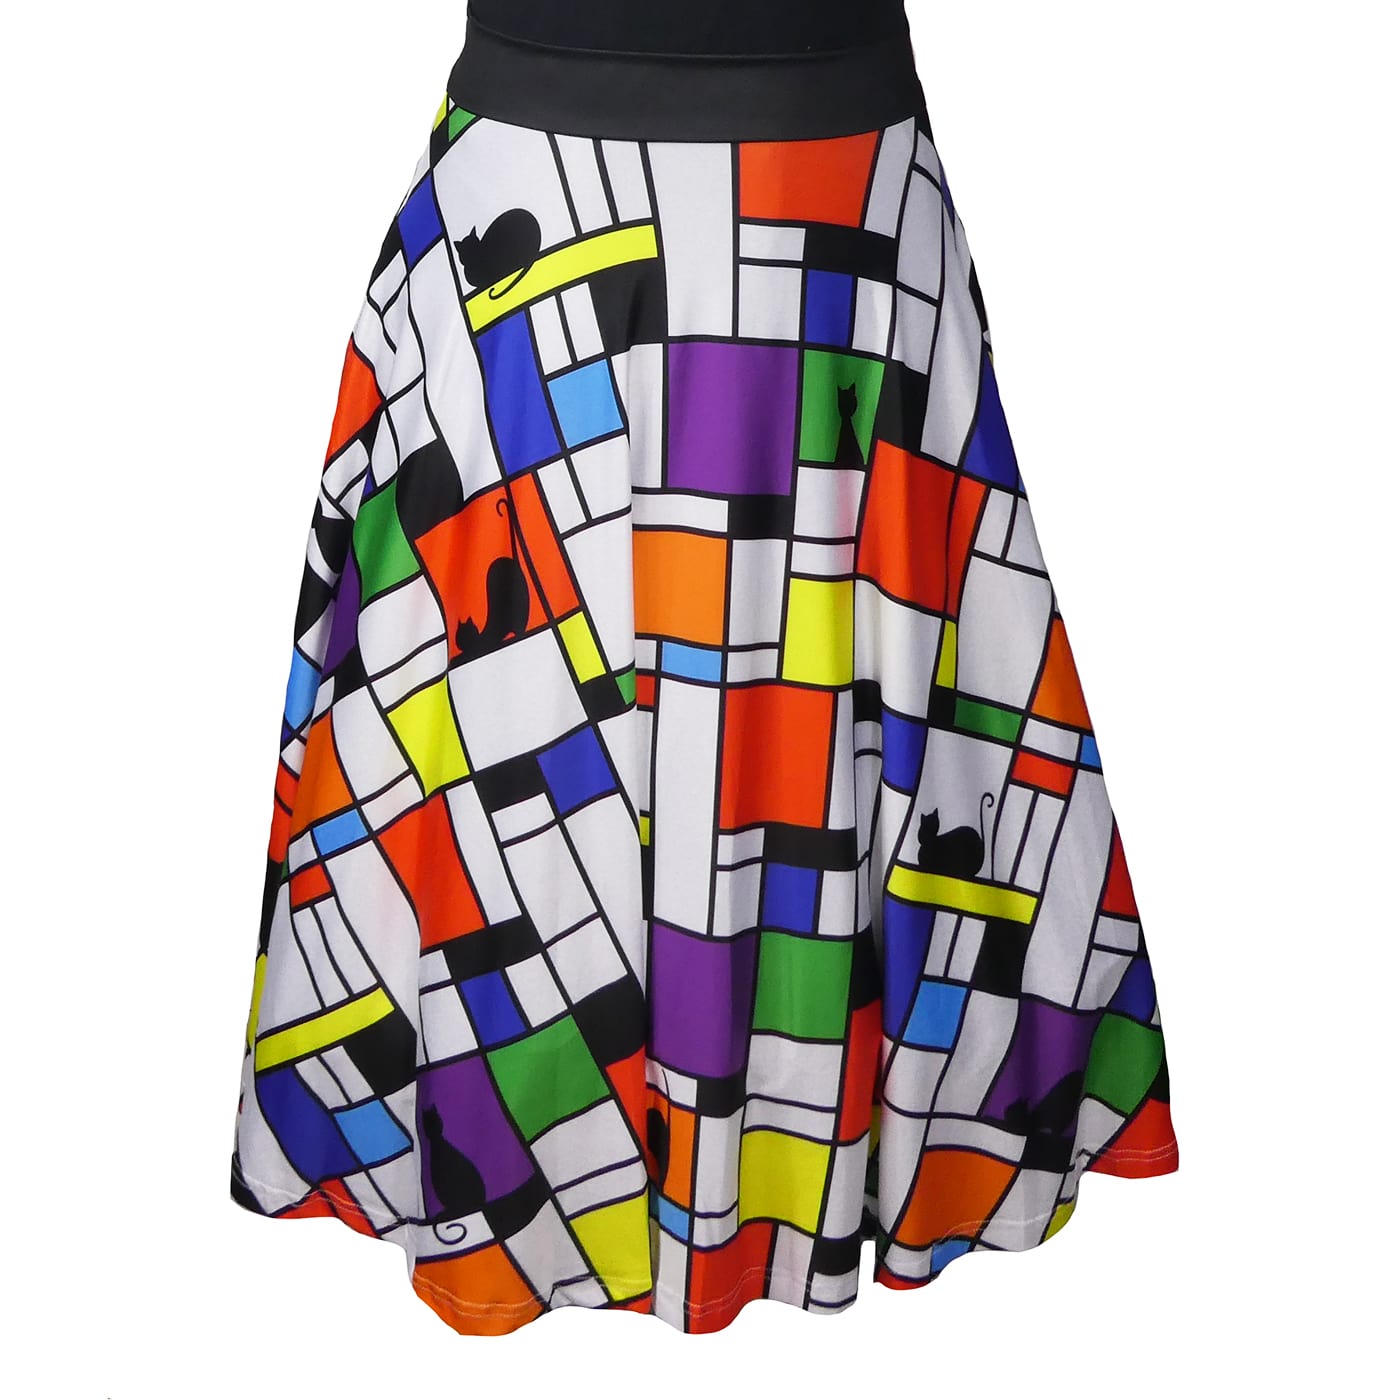 Intrigue Swishy Skirt by RainbowsAndFairies.com.au (Black Cats - Mondrian Art - Skirt With Pockets - Circle Skirt - Vintage Inspired - Mod Retro) - SKU: CL_SWISH_INTRG_ORG - Pic-02